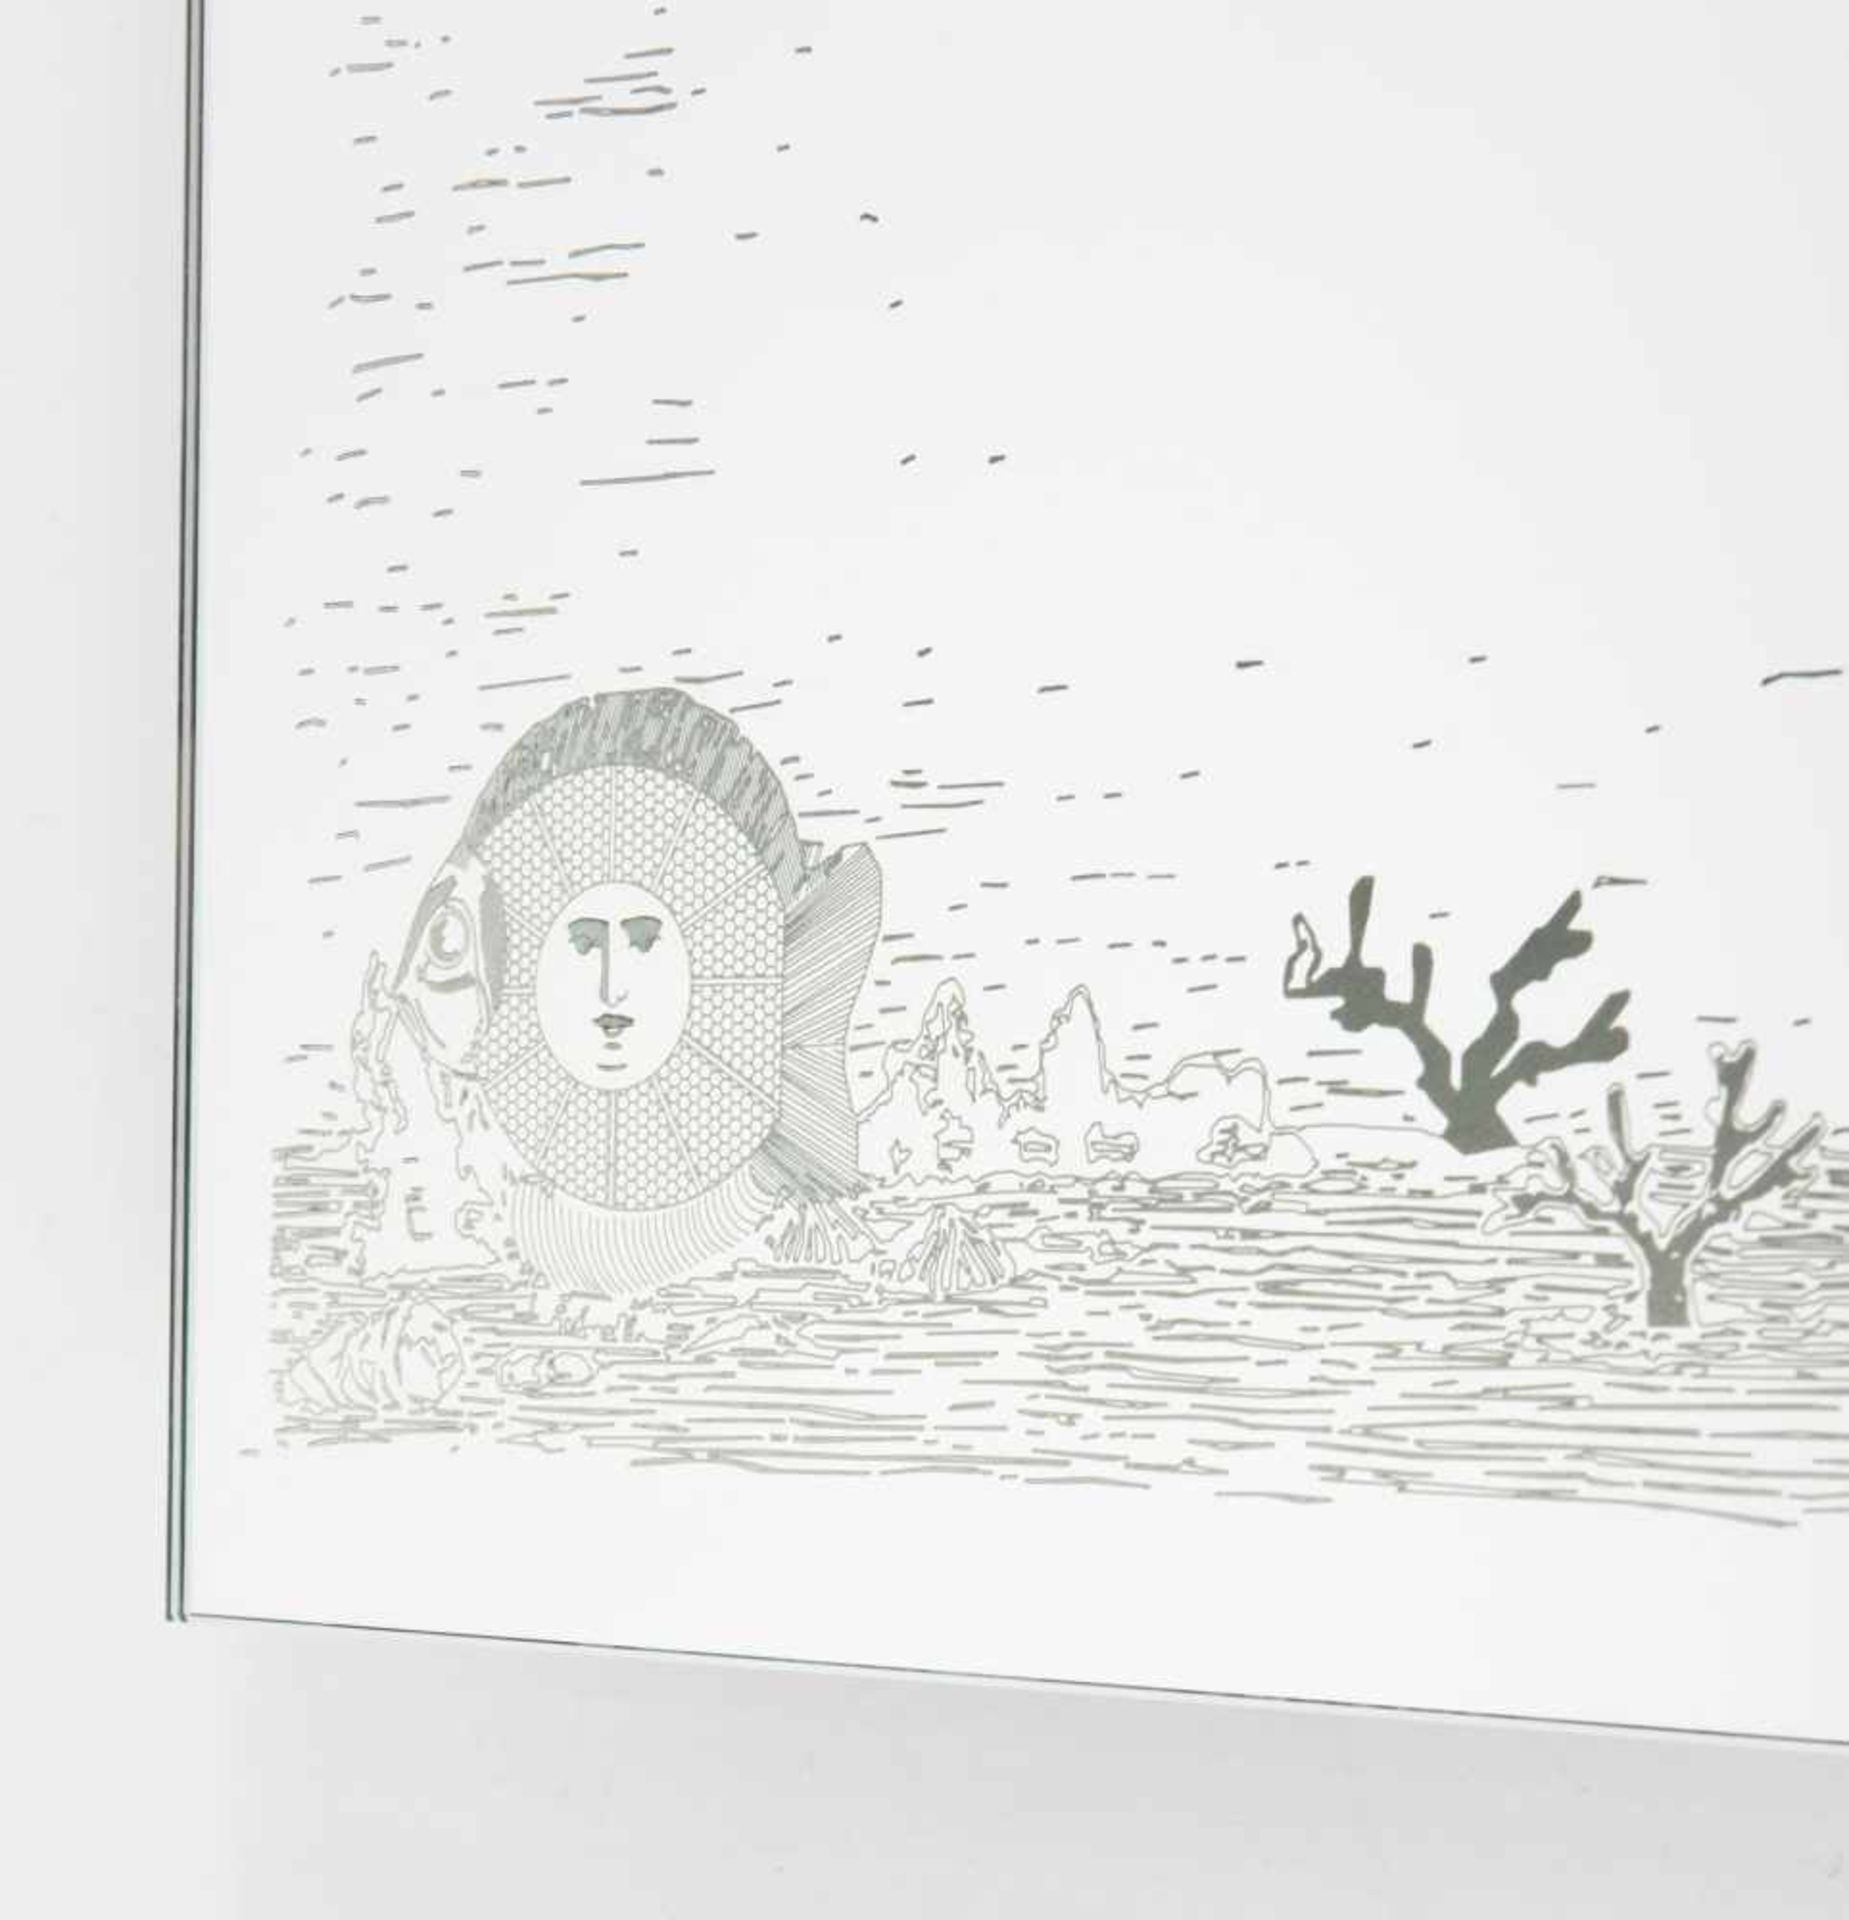 Barnaba Fornasetti Beleuchteter Spiegel 'Fondo Marino', 2000er Jahre 60 x 60 cm. Antonangeli - Image 3 of 4